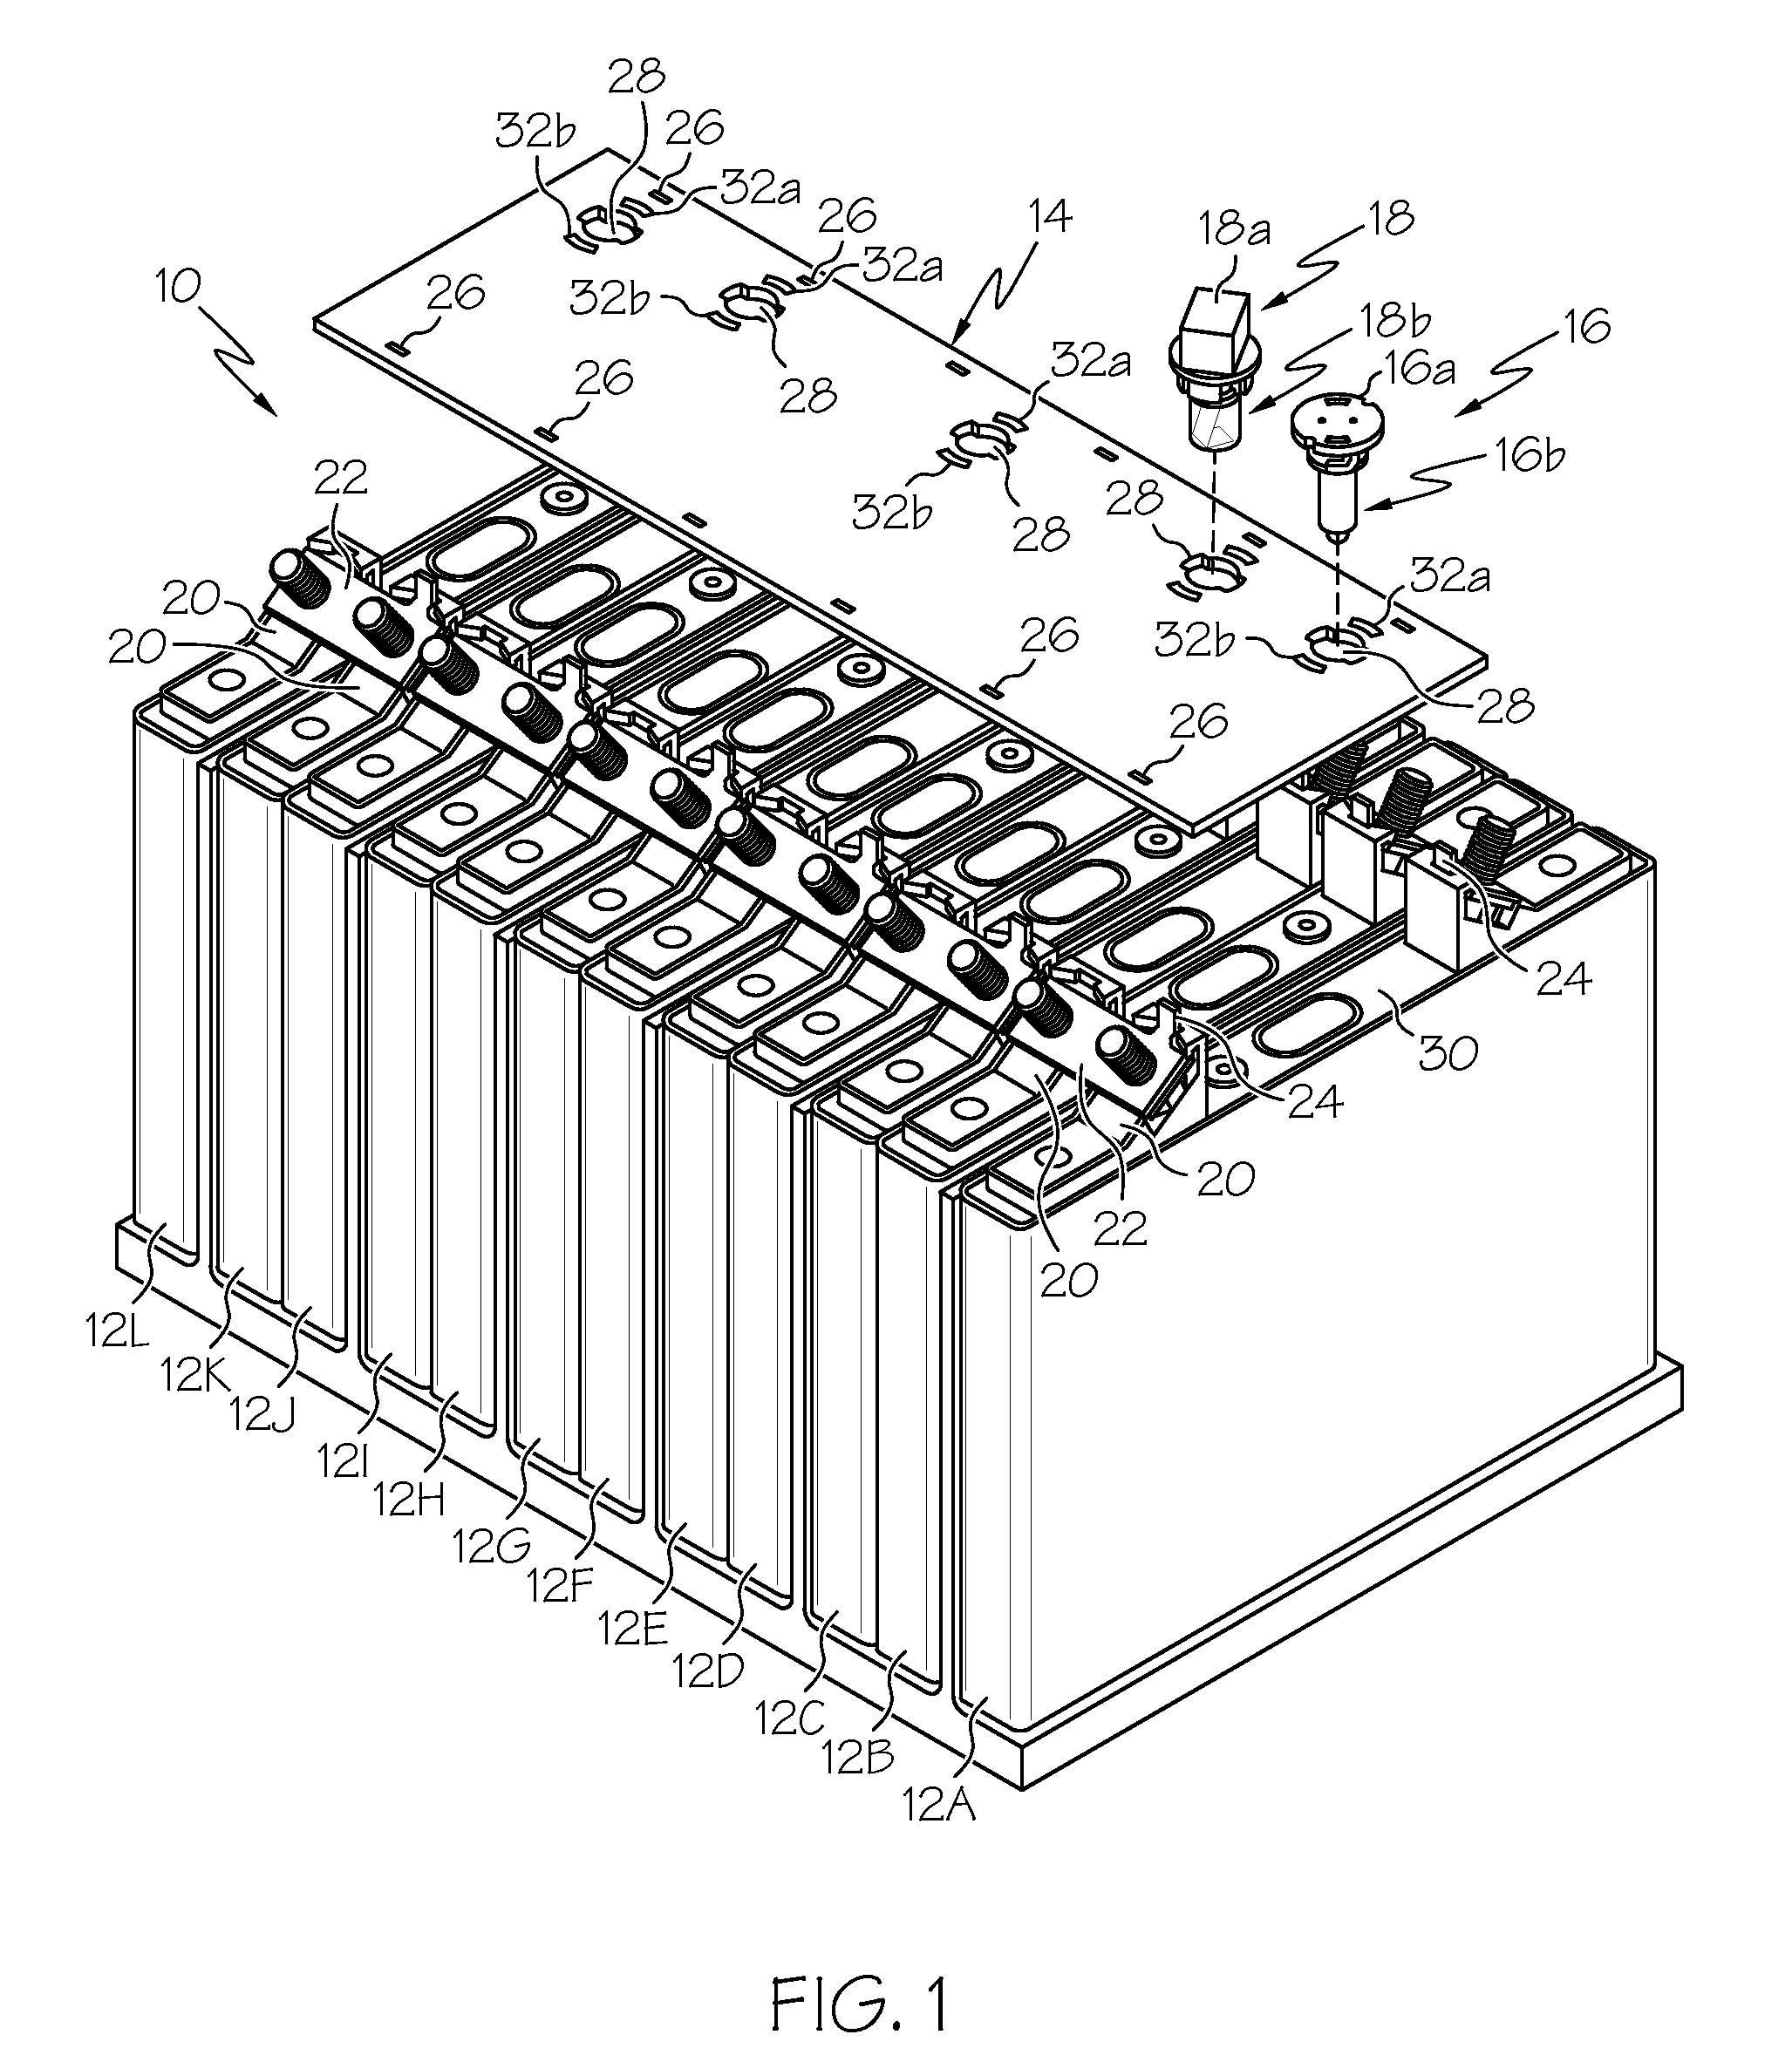 Cell temperature sensing apparatus for a batttery module